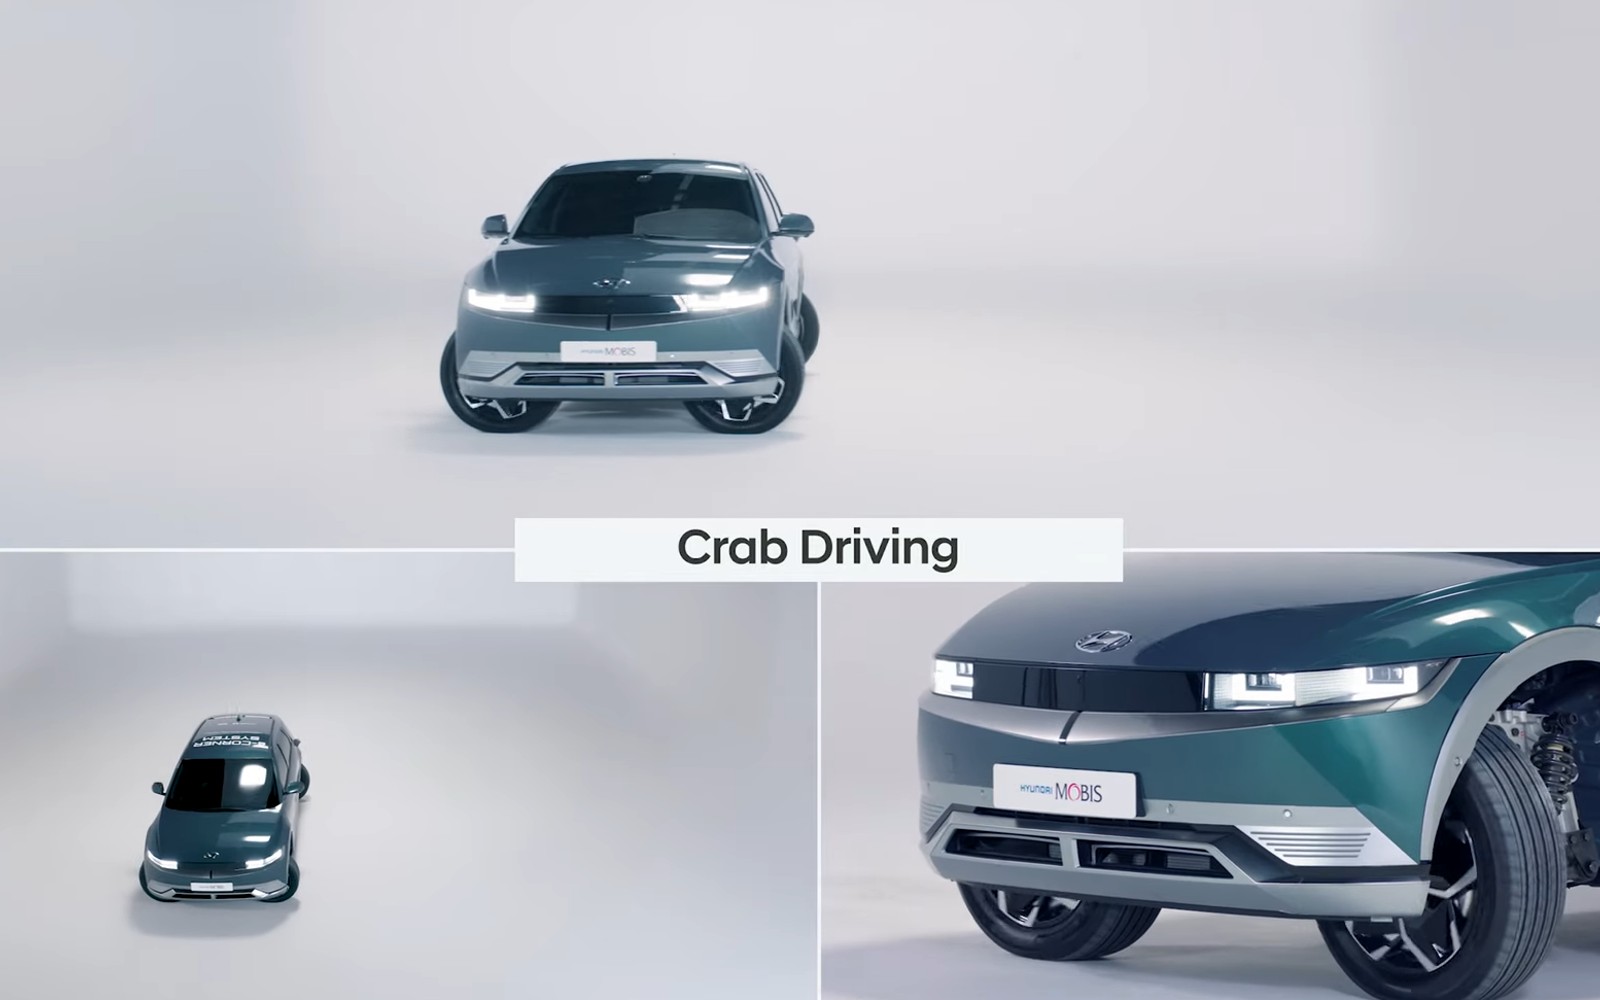 Hyundai managed to put its 'crab-walking' e-Corner technology in an Ioniq EV